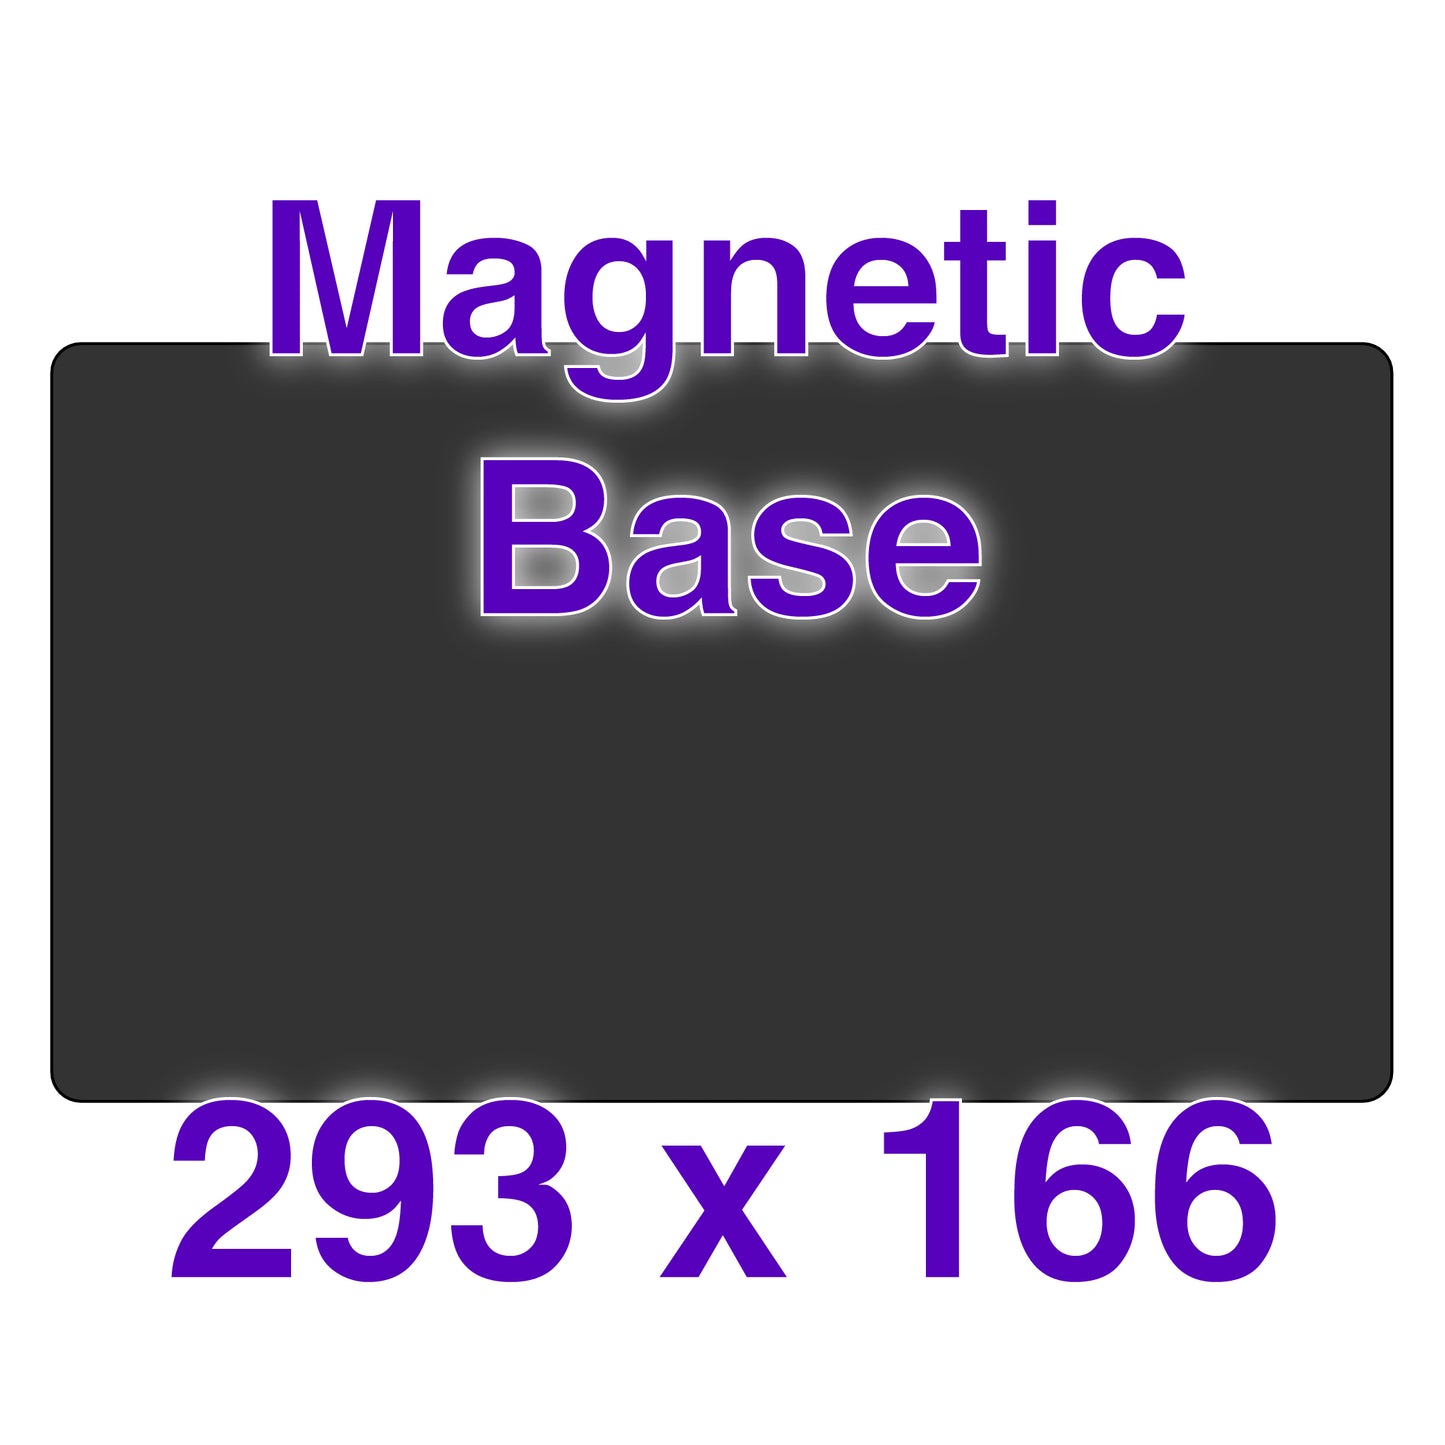 Magnetic Base - 293 x 166